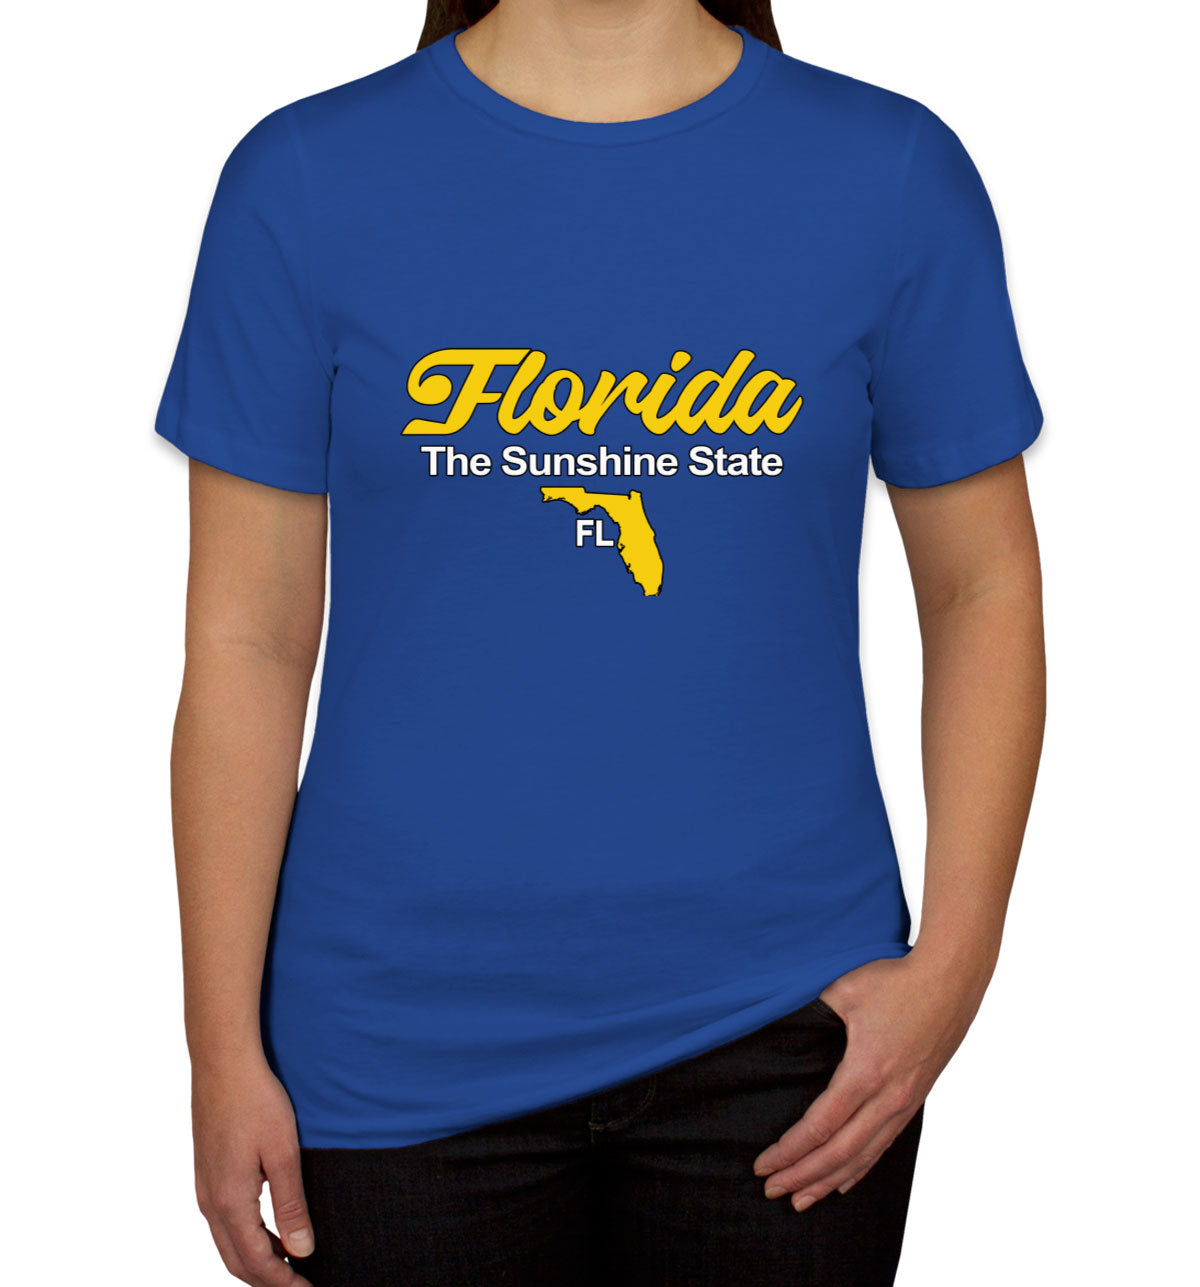 Florida The Sunshine State Women's T-shirt